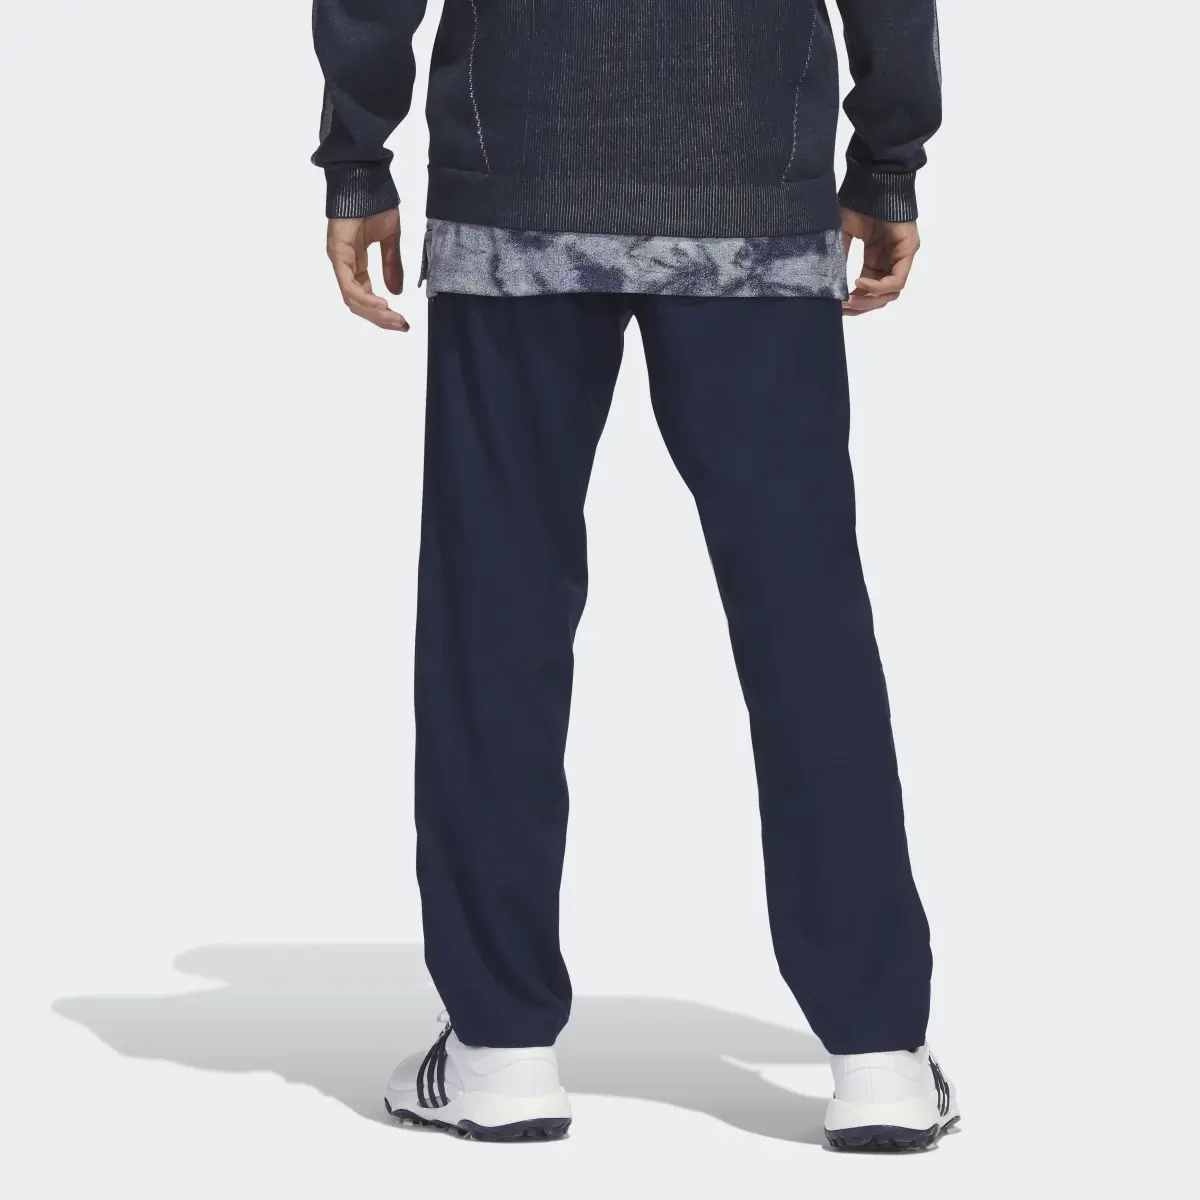 Adidas Made To Be Remade Pintuck Golf Pants. 3